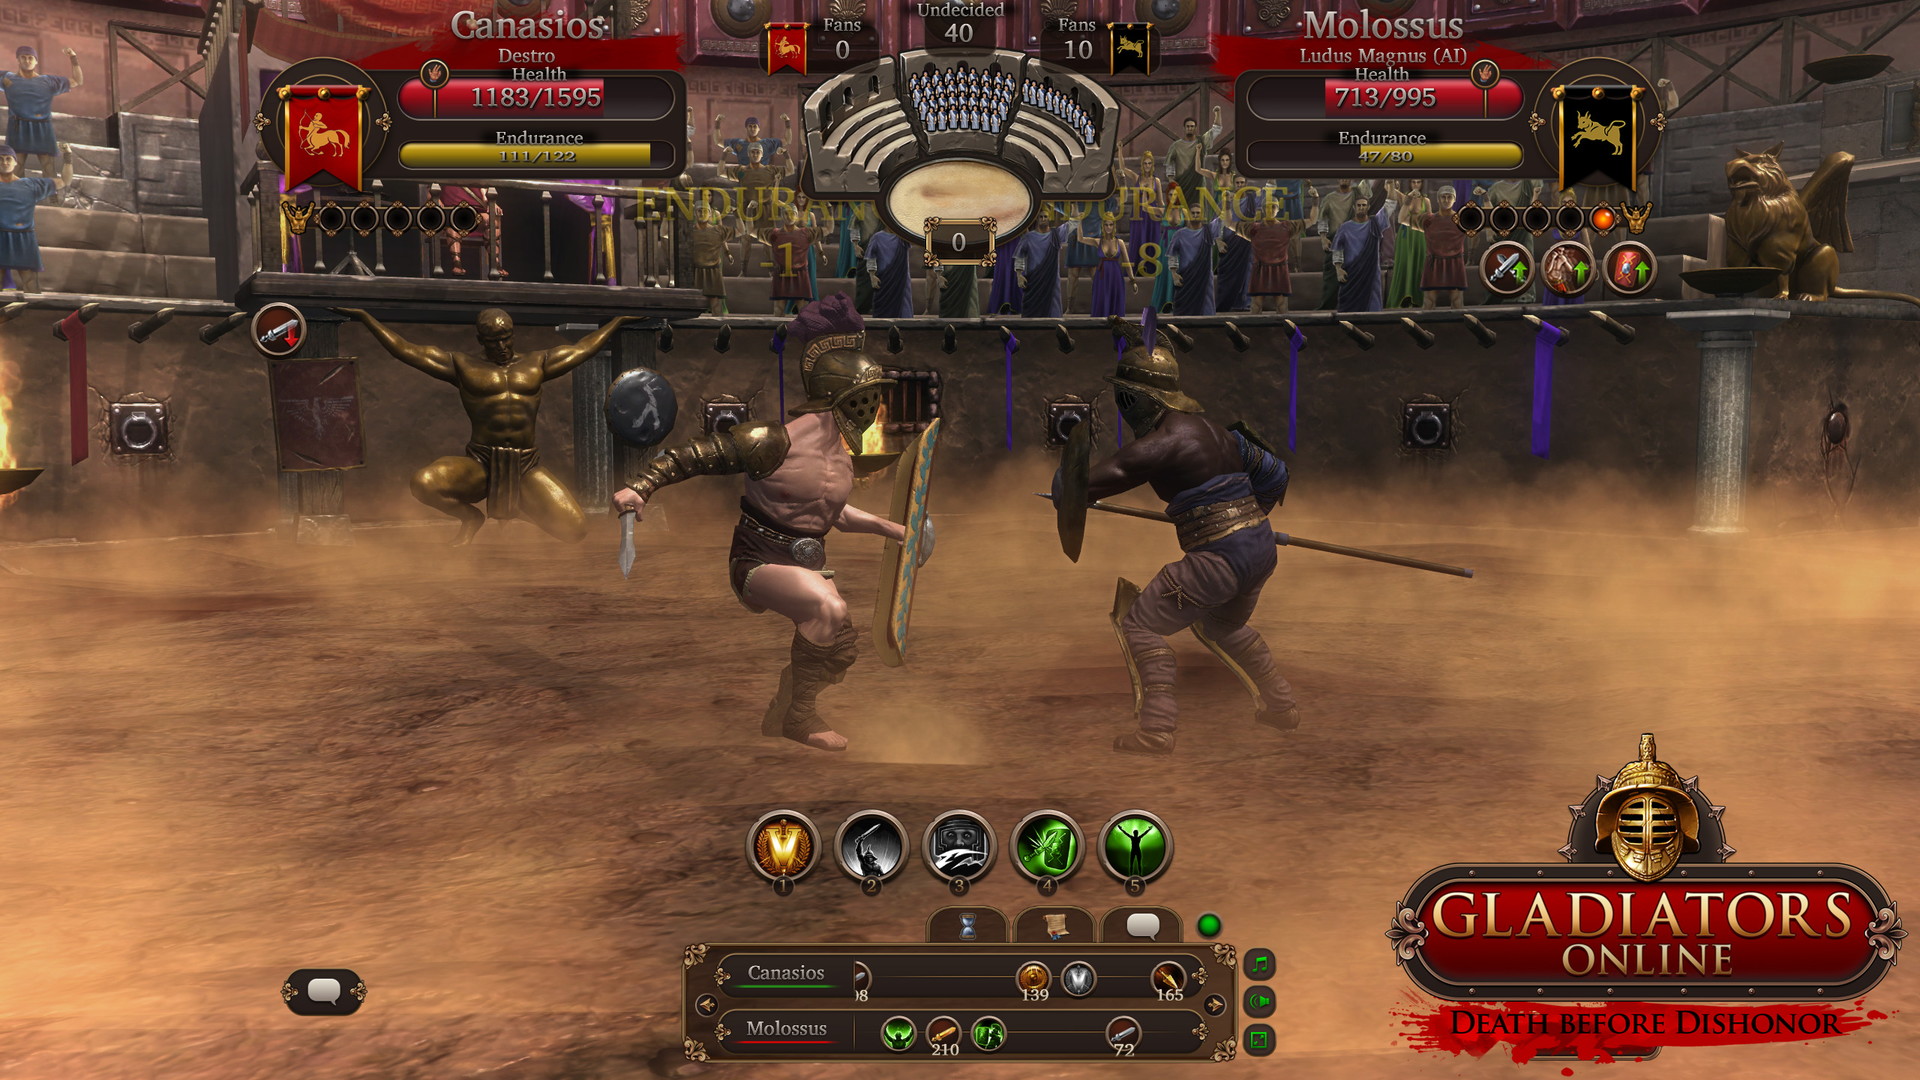 Gladiators Online: Death Before Dishonor - screenshot 11